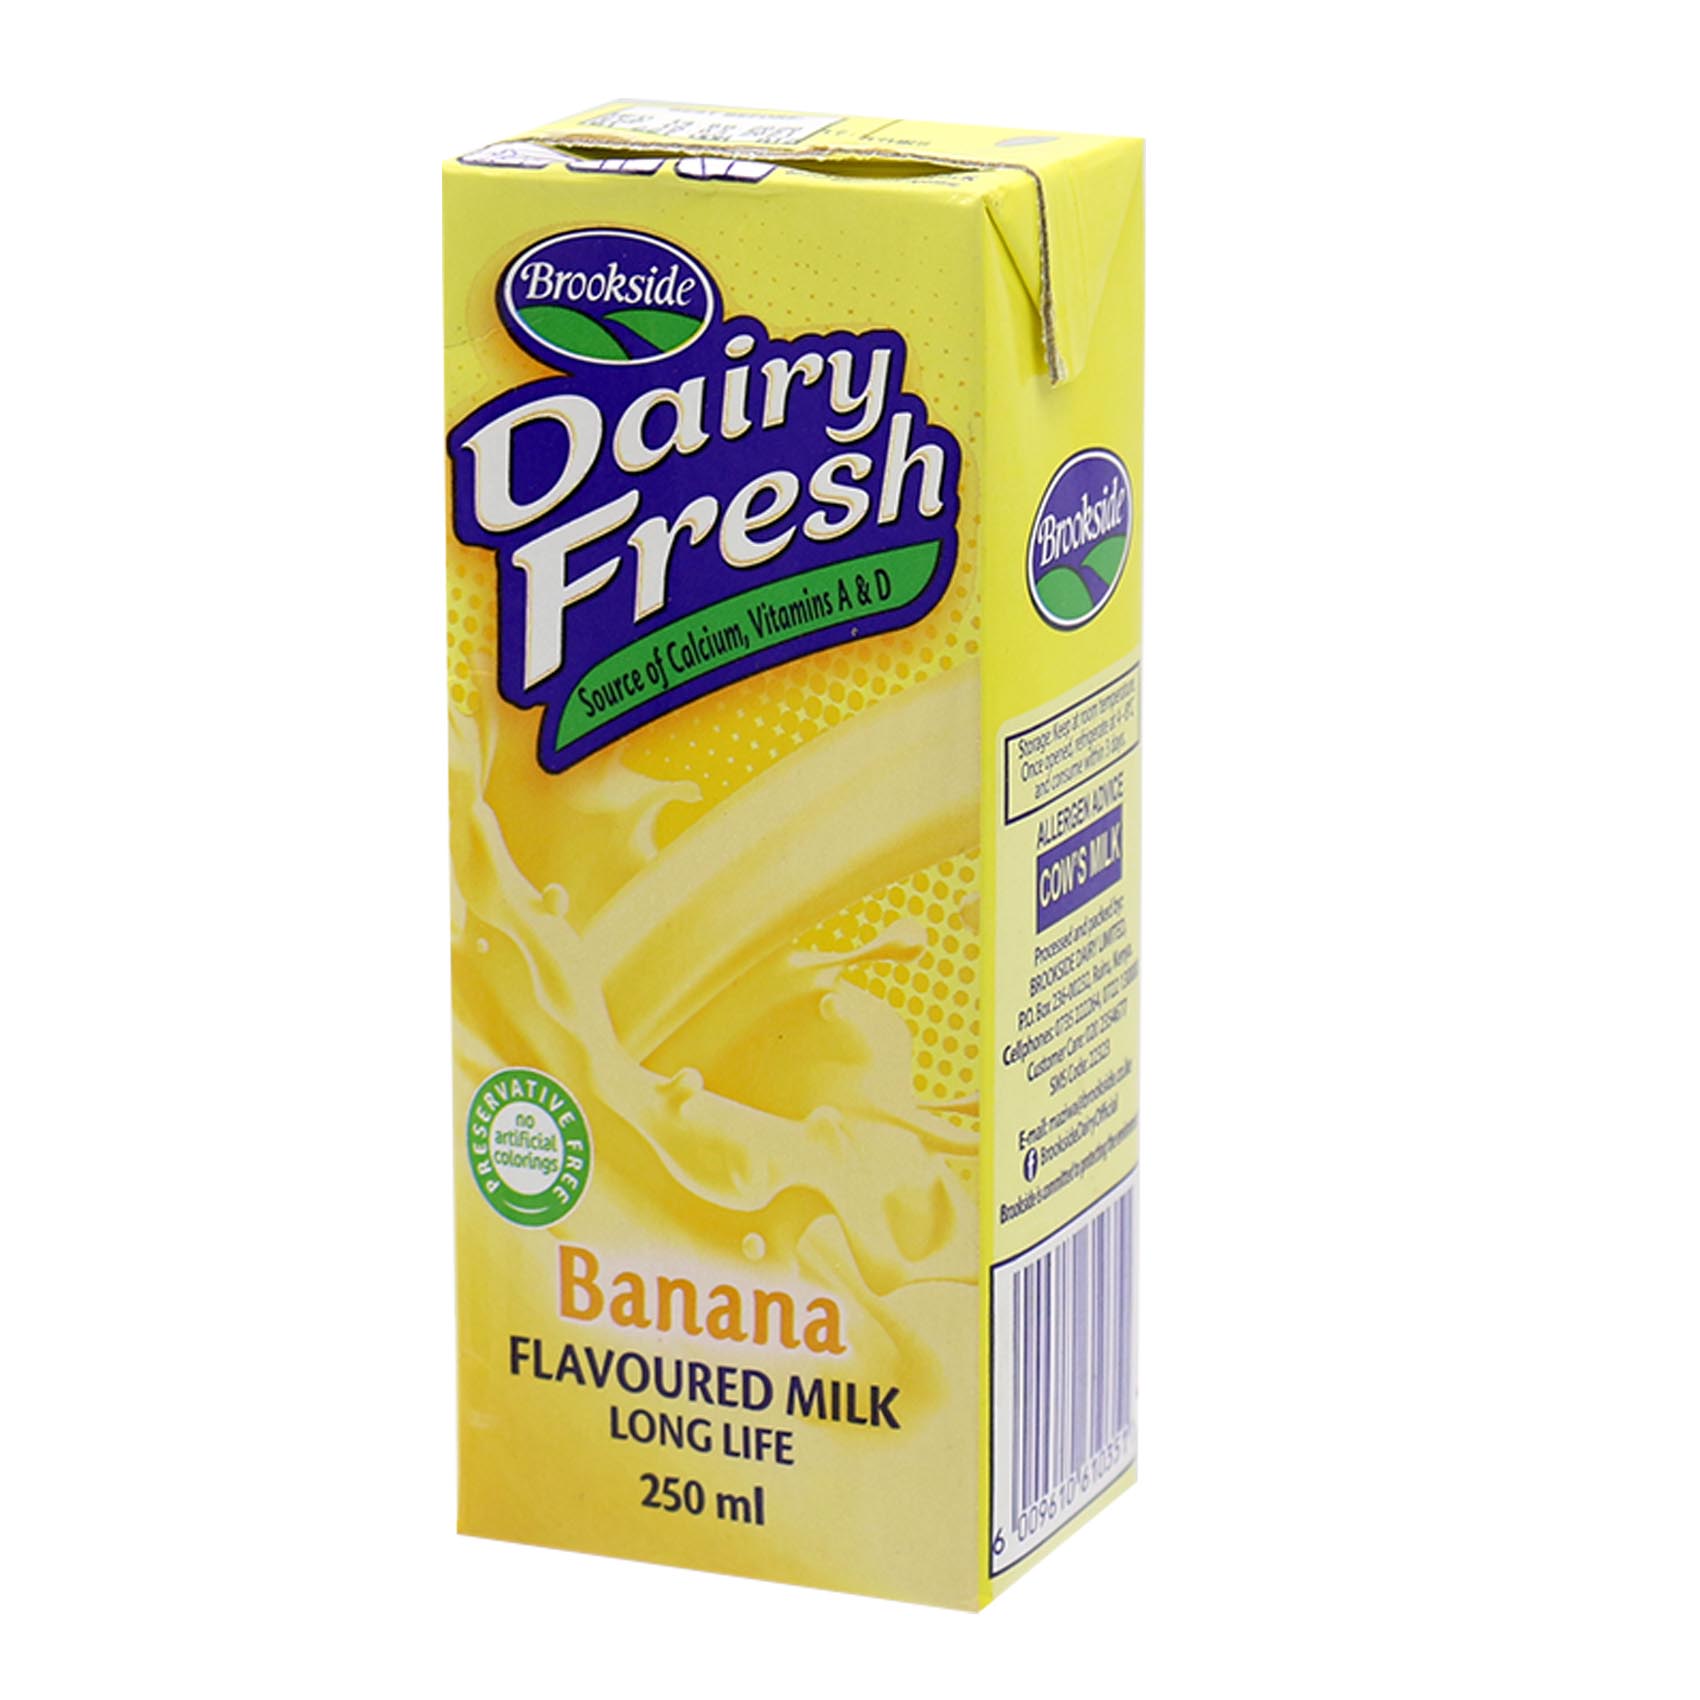 Brookside Dairy Fresh  Banana Flavoured Milk  250ml - Long Life